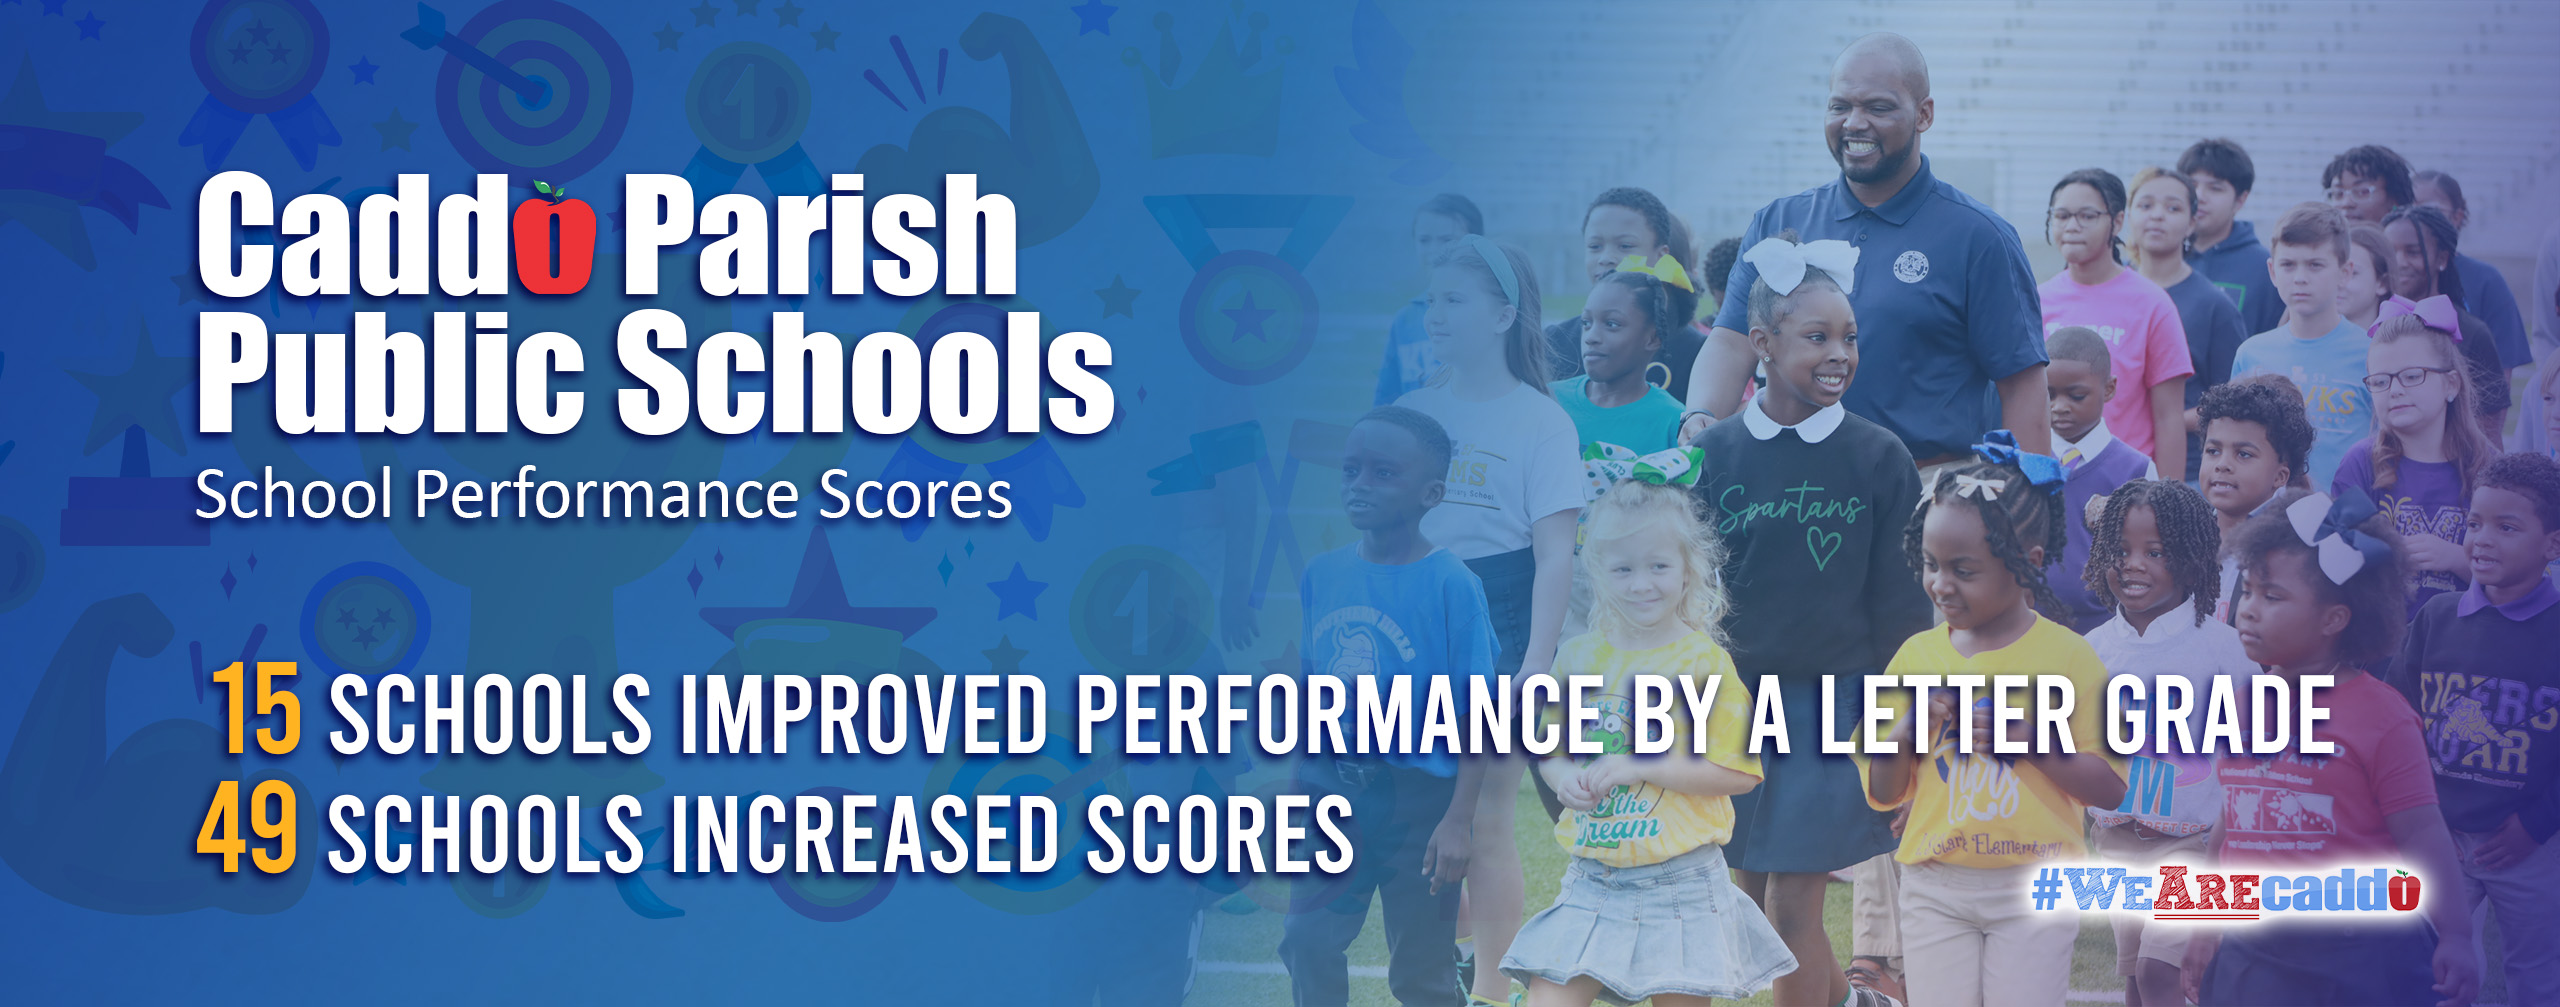 Caddo Parish School Performance Scores